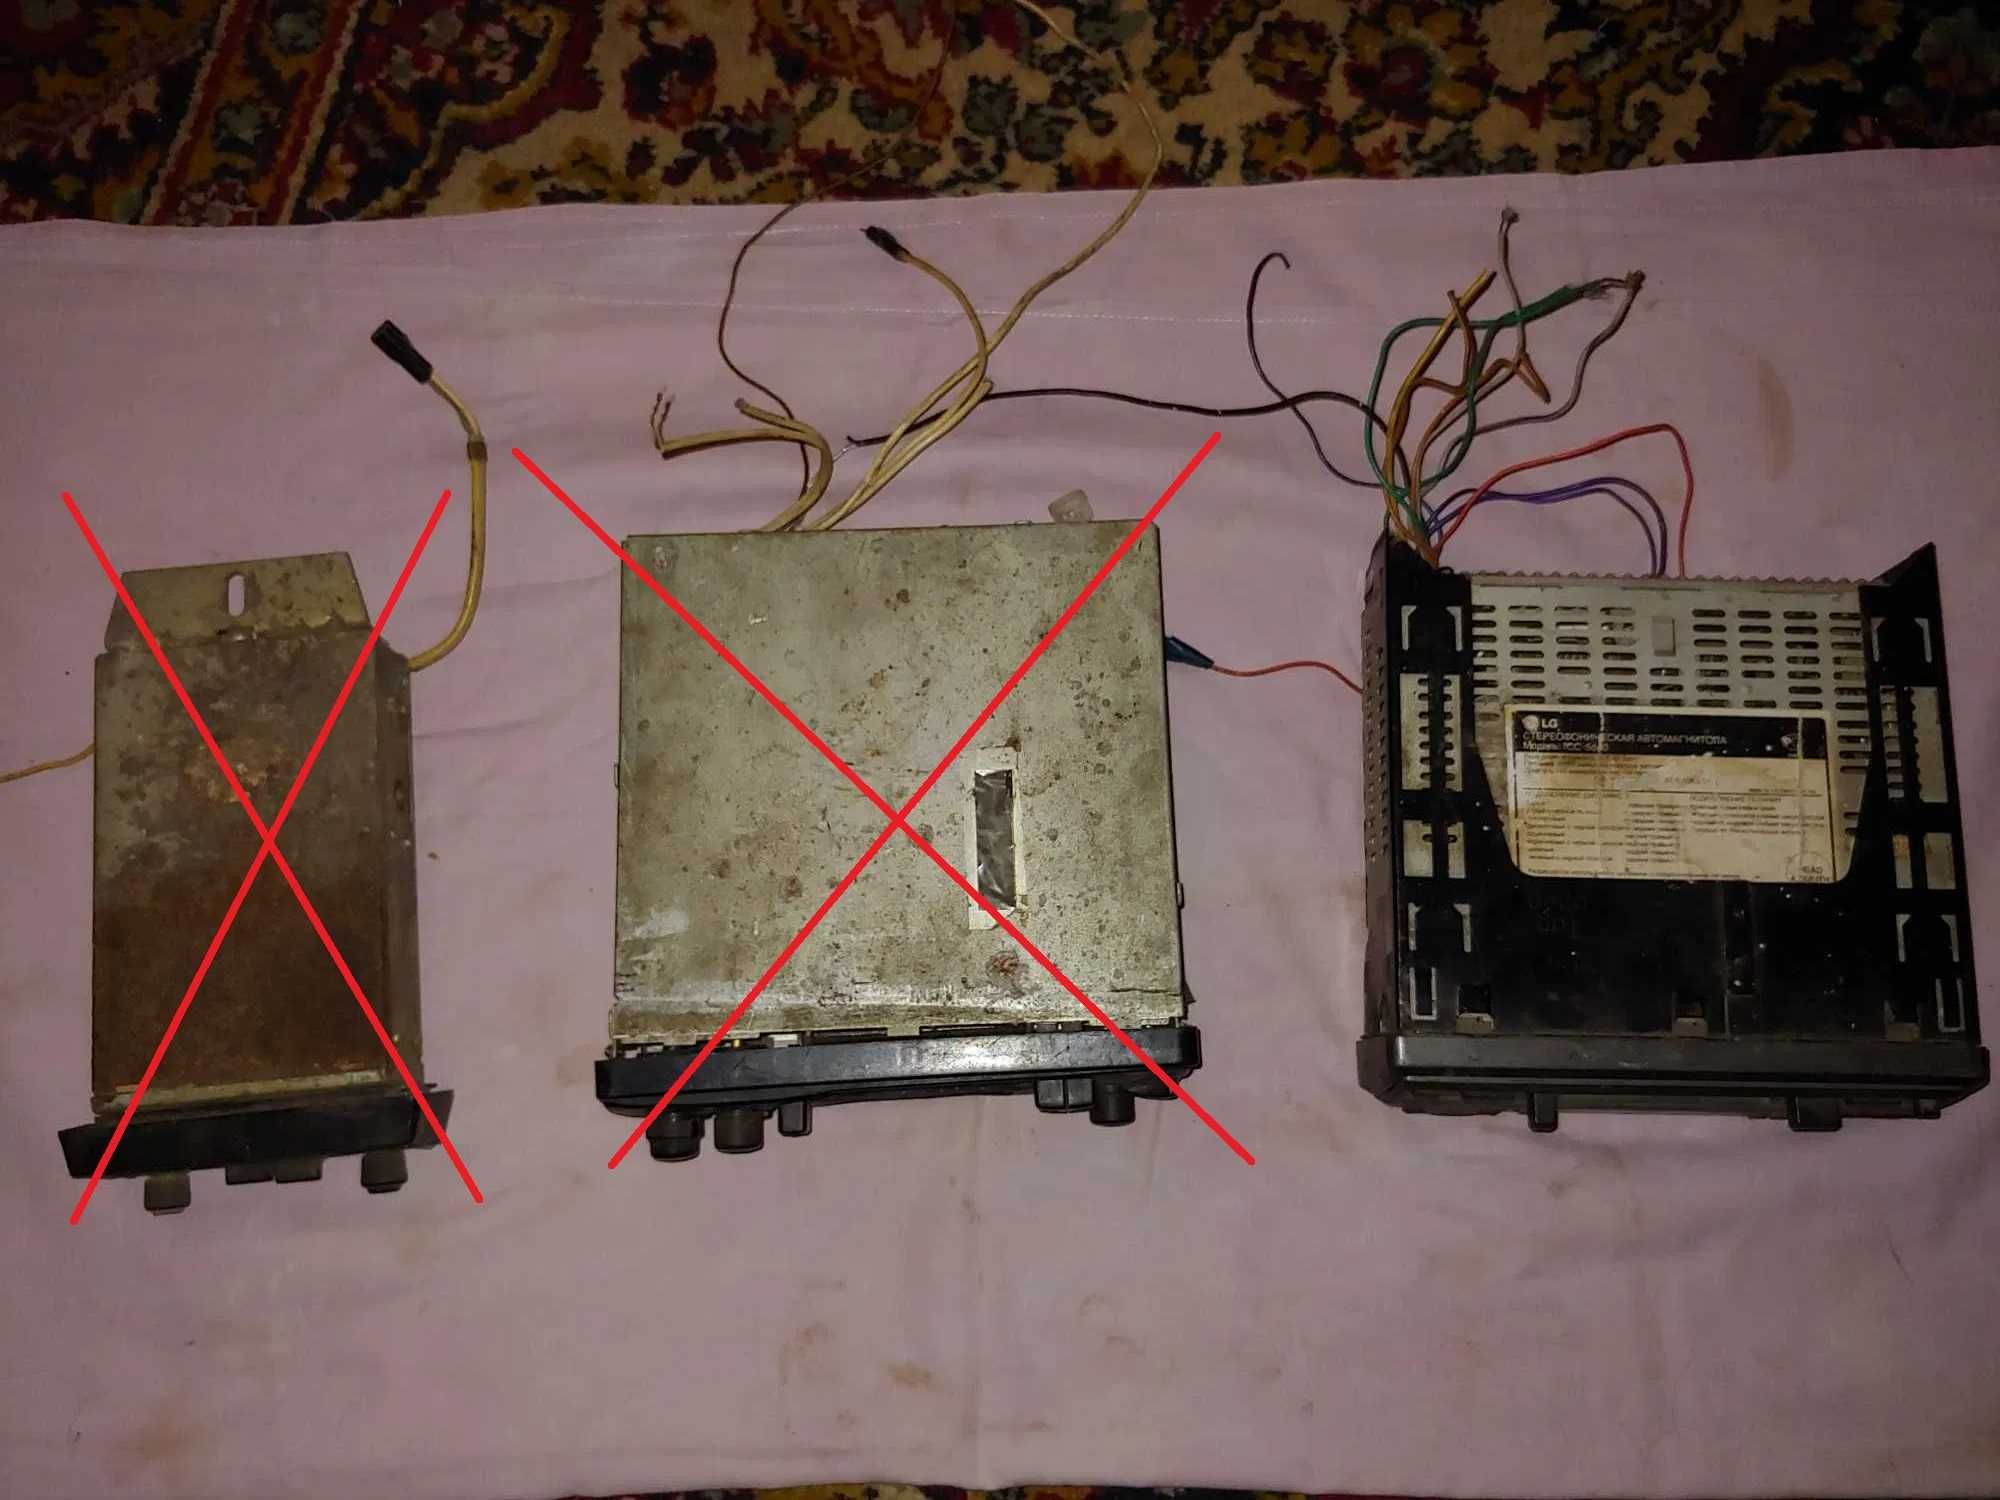 Автомагнитола радиоприемник LG TCC-5630 на детали или под ремонт